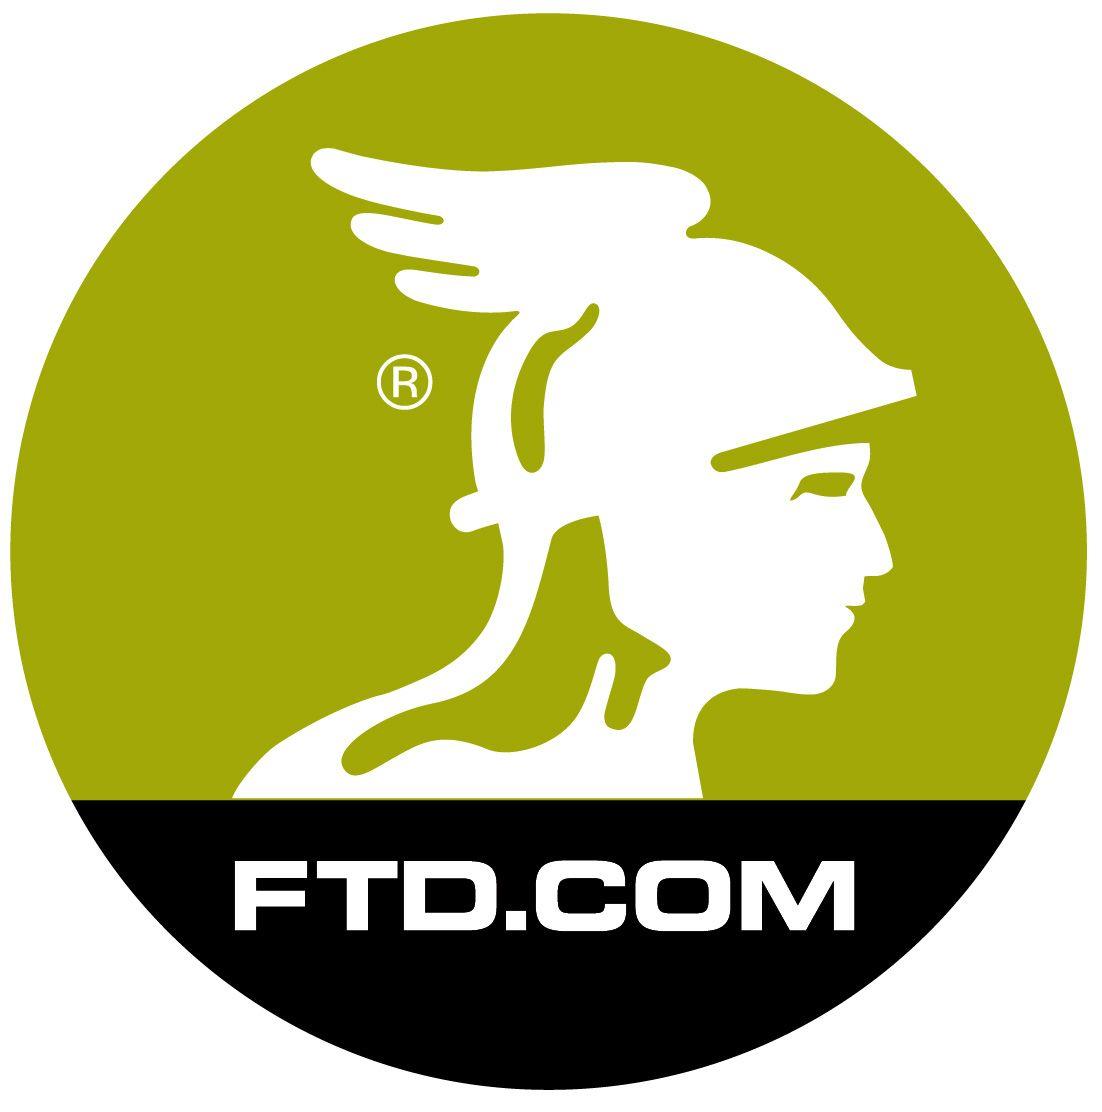 FTD.com Logo - fTD logo:. Mythology allusions (for school). Logos, Ferrari logo